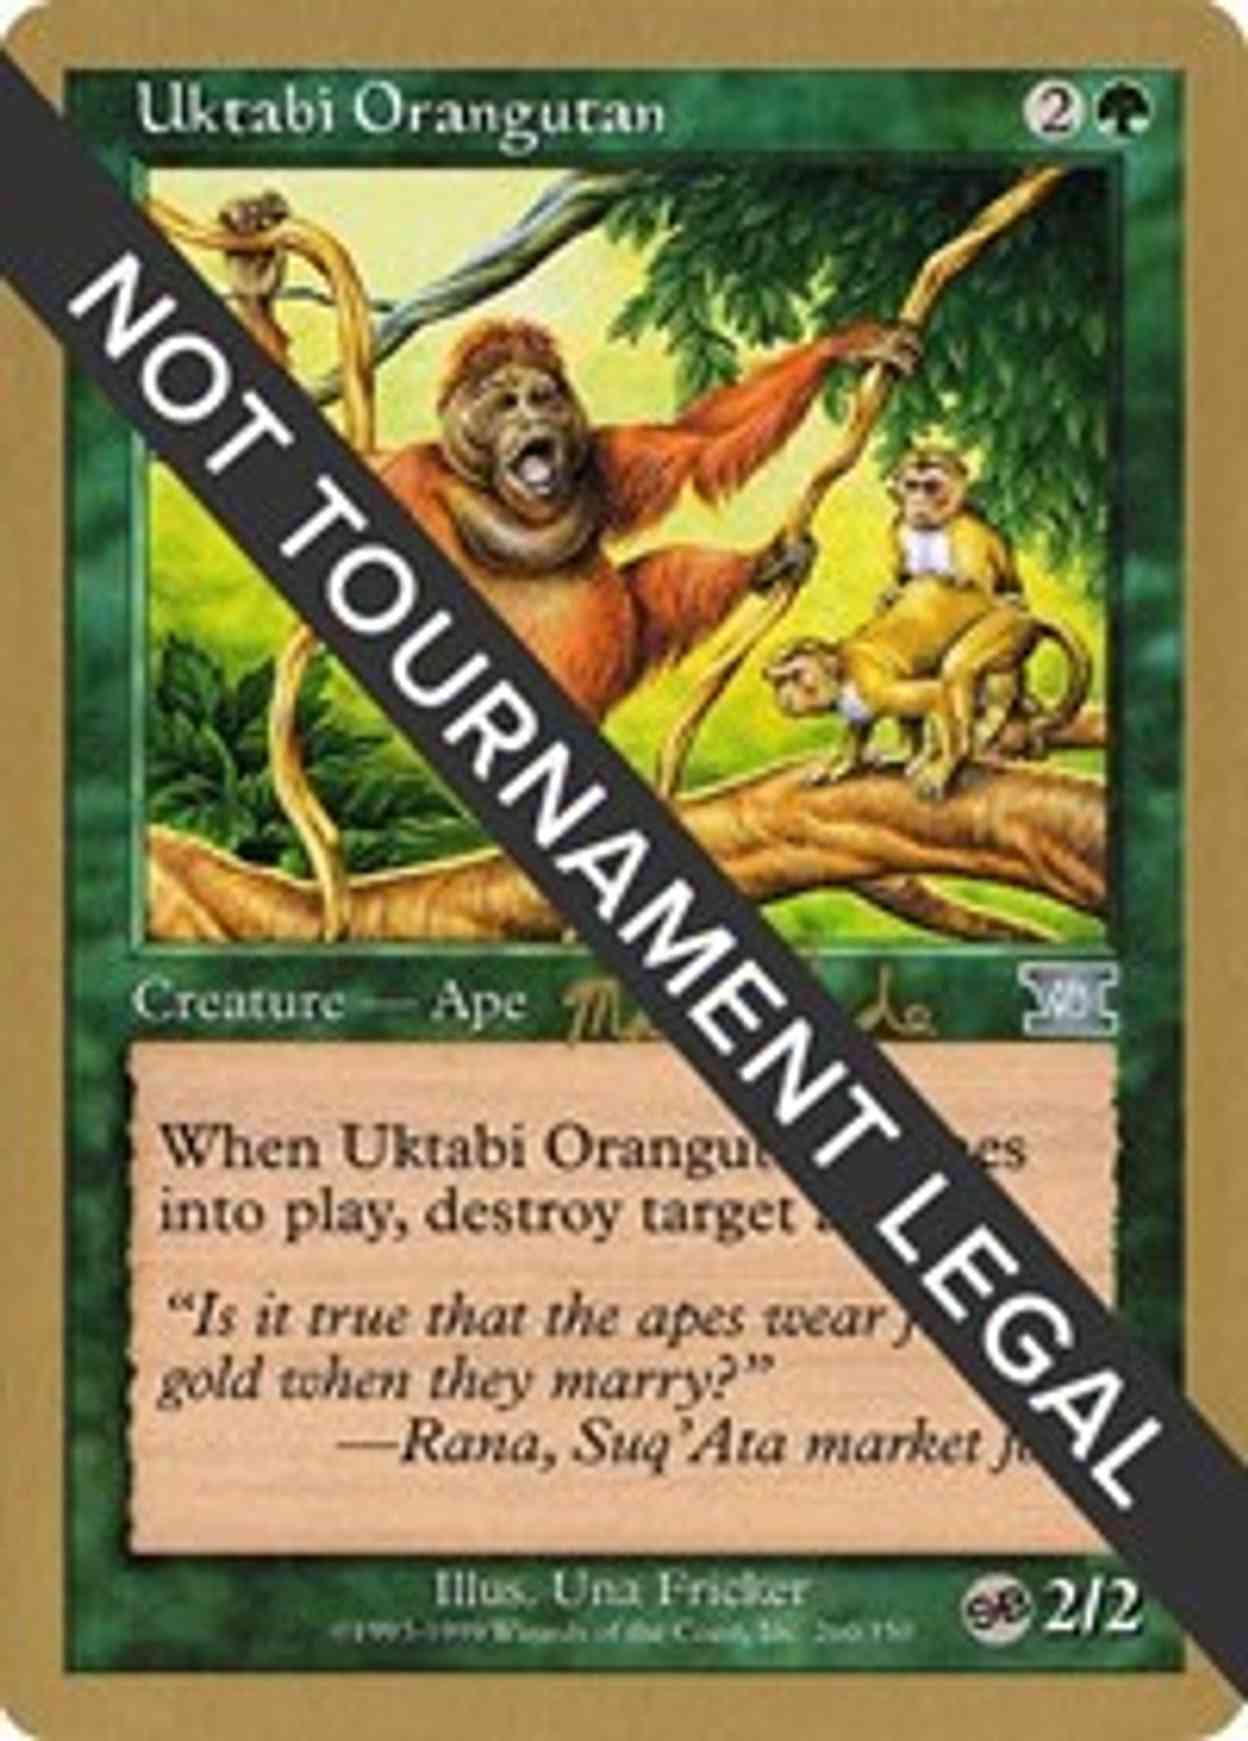 Uktabi Orangutan - 1999 Matt Linde (6ED) (SB) magic card front